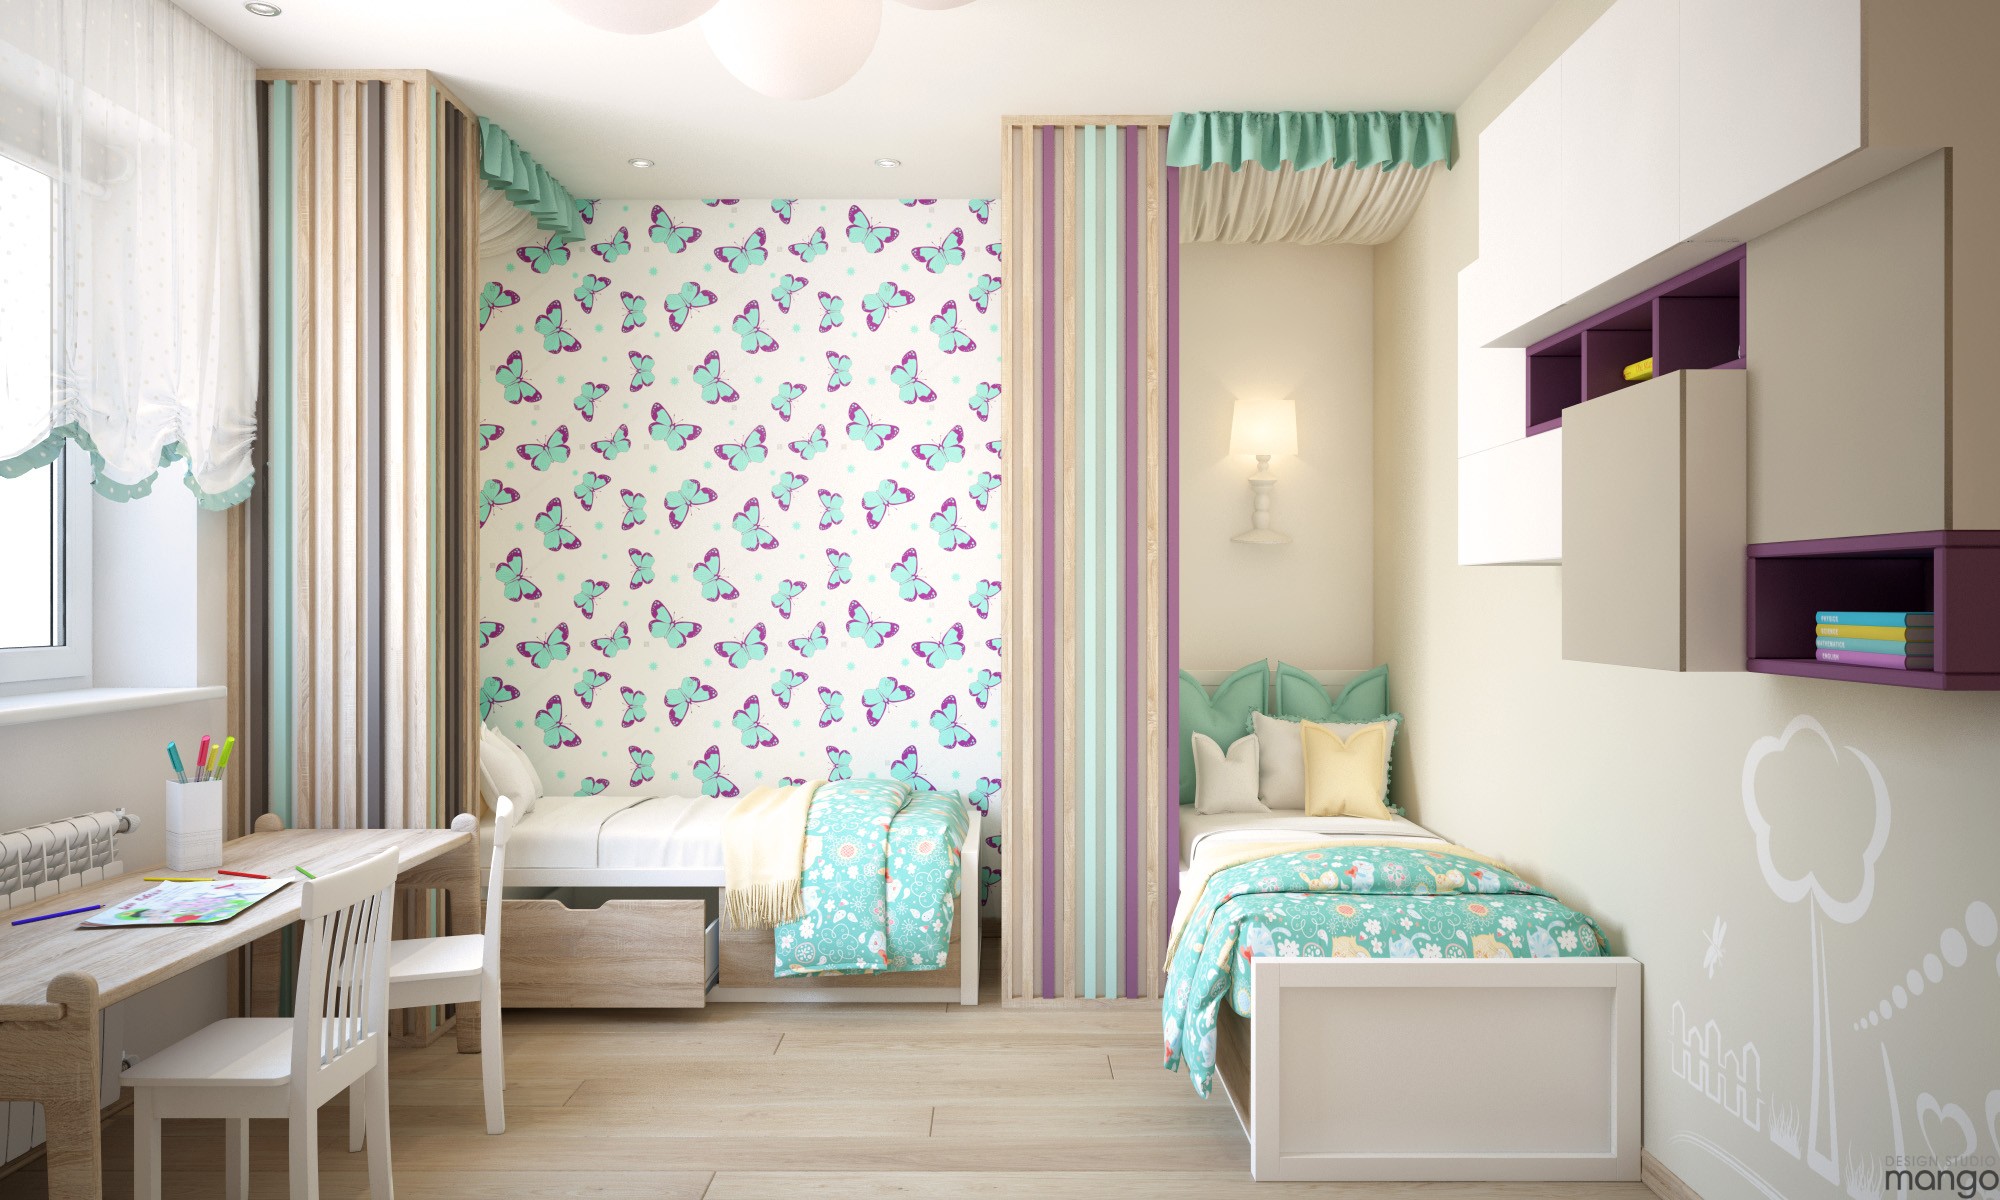 trendy girl's room design "width =" 2000 "height =" 1200 "srcset =" https://mileray.com/wp-content/uploads/2020/05/1588508576_792_Attractive-Girls-Room-Decor-Which-Applying-Pink-Color-Accent-Design.jpg 2000w, https: // myfashionos .com / wp-content / uploads / 2016/11 / Design-Studio-Mango-12-300x180.jpg 300w, https://mileray.com/wp-content/uploads/2016/11/Design-Studio- Mango- 12-768x461.jpg 768w, https://mileray.com/wp-content/uploads/2016/11/Design-Studio-Mango-12-1024x614.jpg 1024w, https://mileray.com/wp- content / uploads / 2016/11 / Design-Studio-Mango-12-696x418.jpg 696w, https://mileray.com/wp-content/uploads/2016/11/Design-Studio-Mango-12-1068x641.jpg 1068w, https://mileray.com/wp-content/uploads/2016/11/Design-Studio-Mango-12-700x420.jpg 700w "sizes =" (maximum width: 2000px) 100vw, 2000px